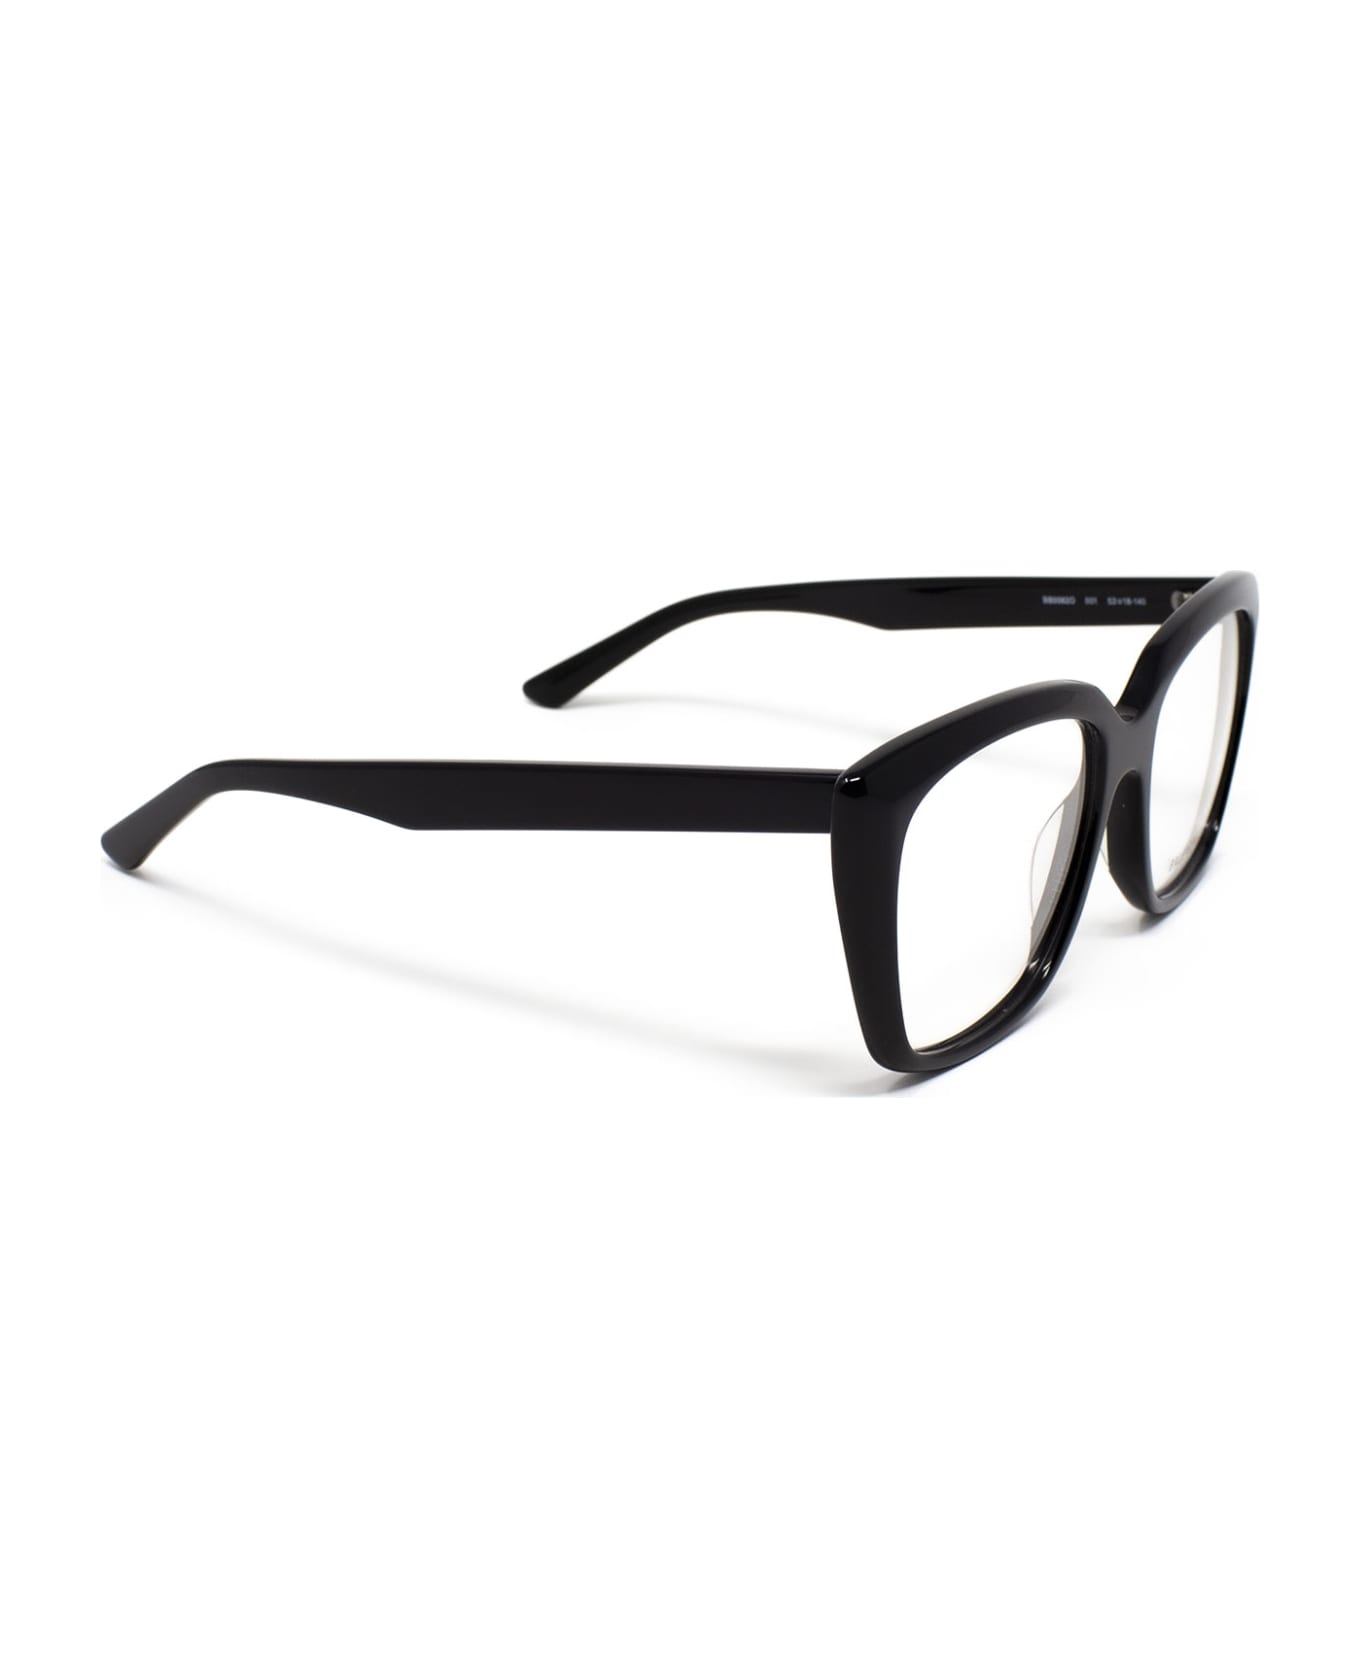 Balenciaga Eyewear Glasses - Black